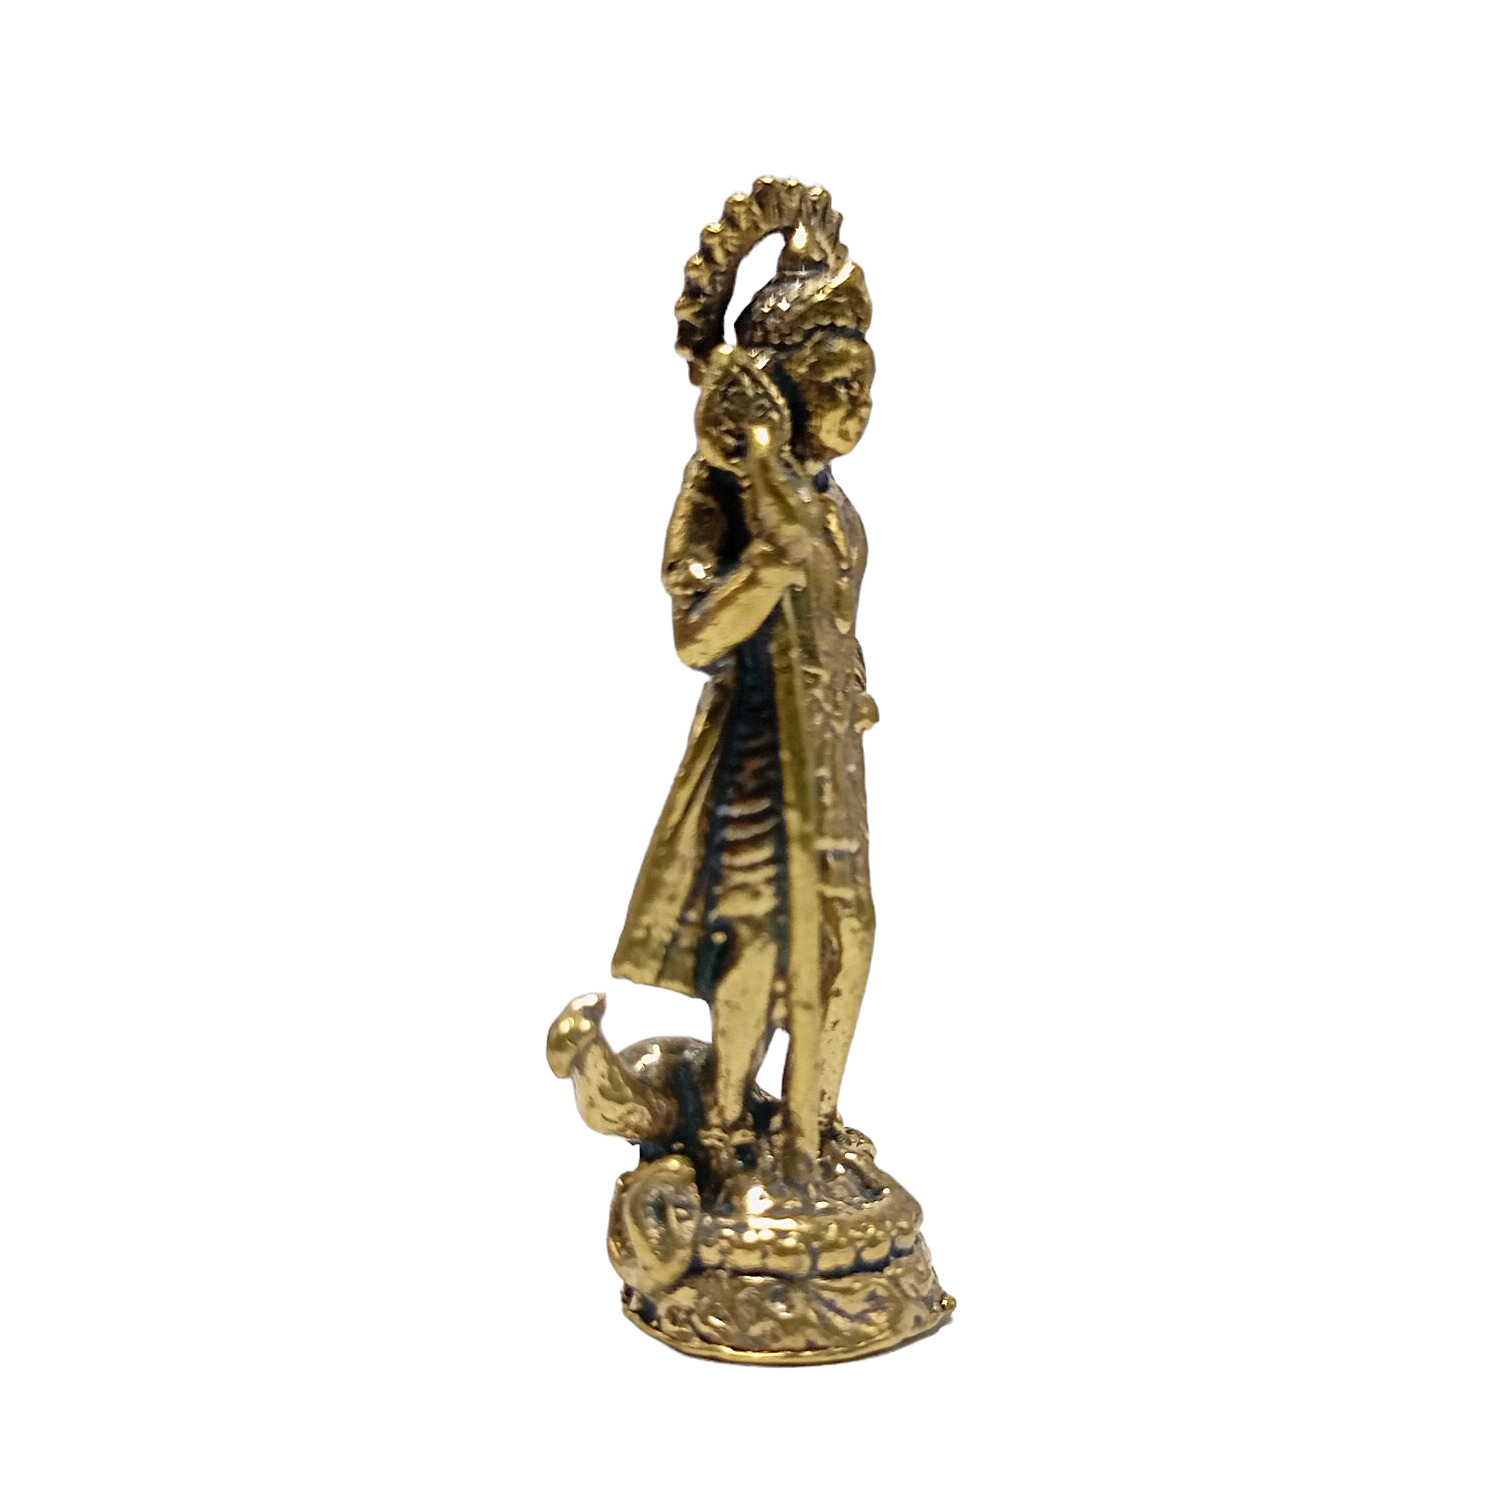 Lord Kartikye Murugan Kartik Swami Statue Brass Son of Shiva God of War Victory